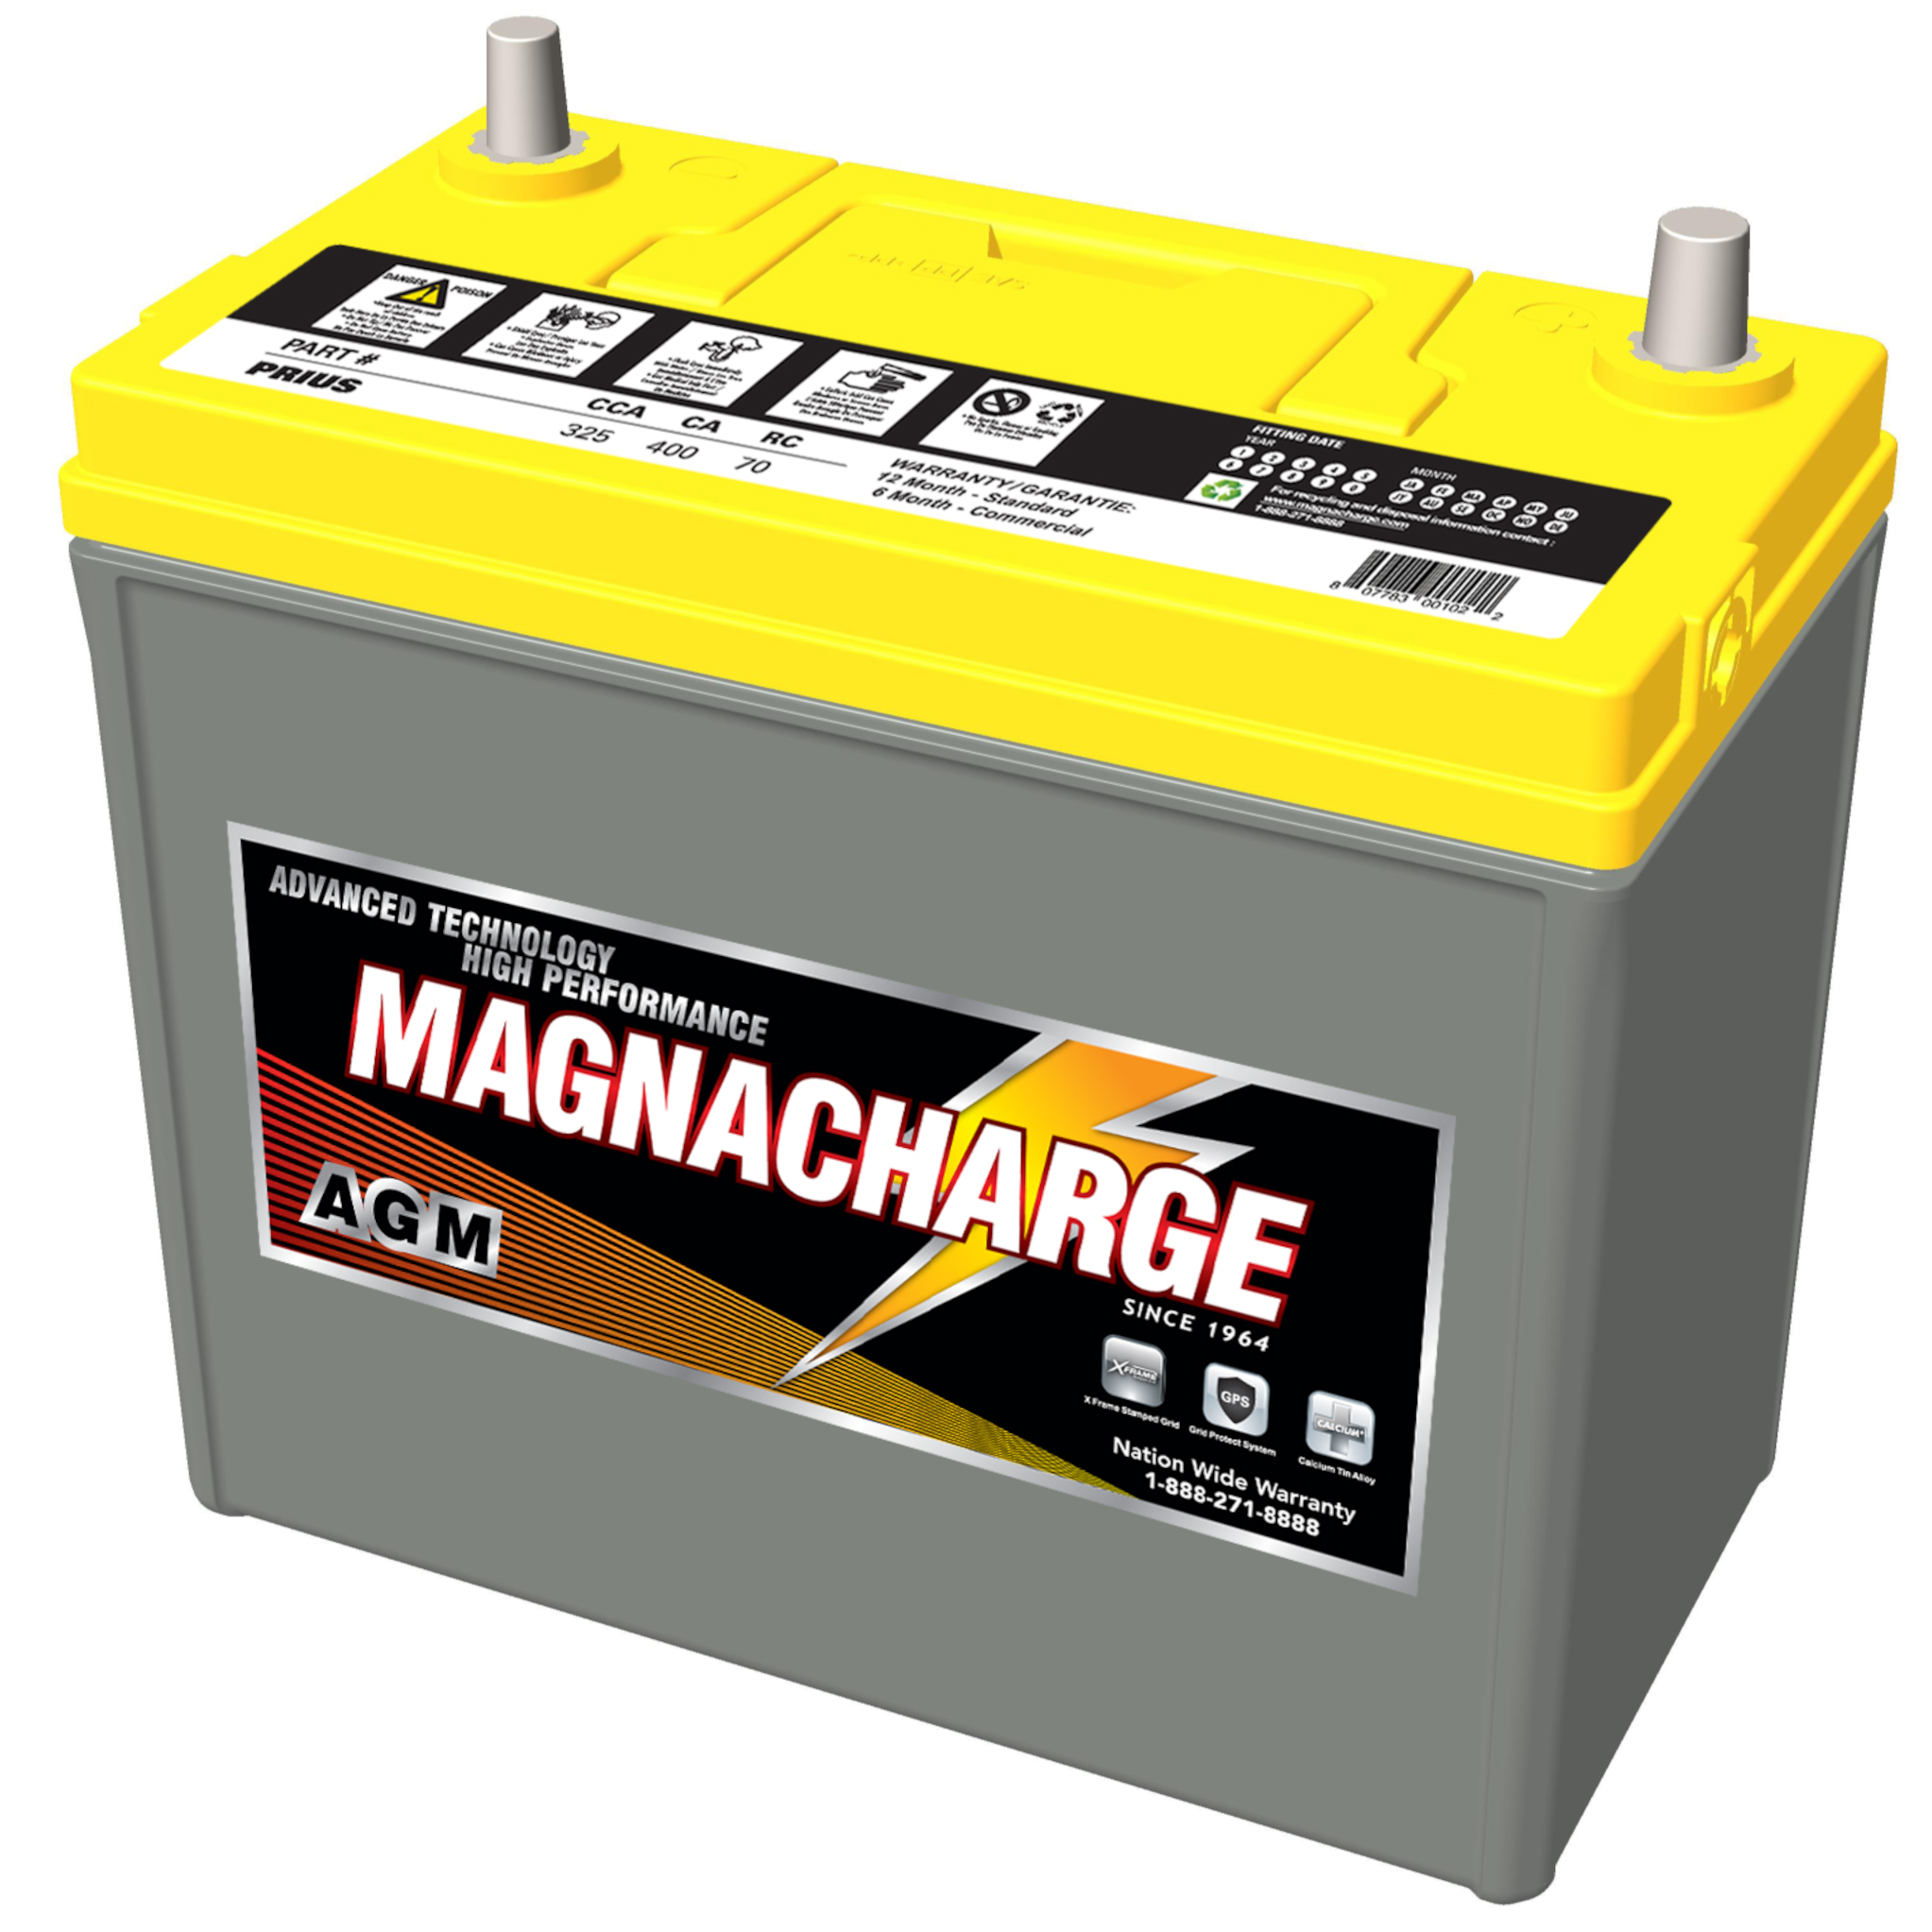 Magnacharge PRIUS 12V AGM Car Battery